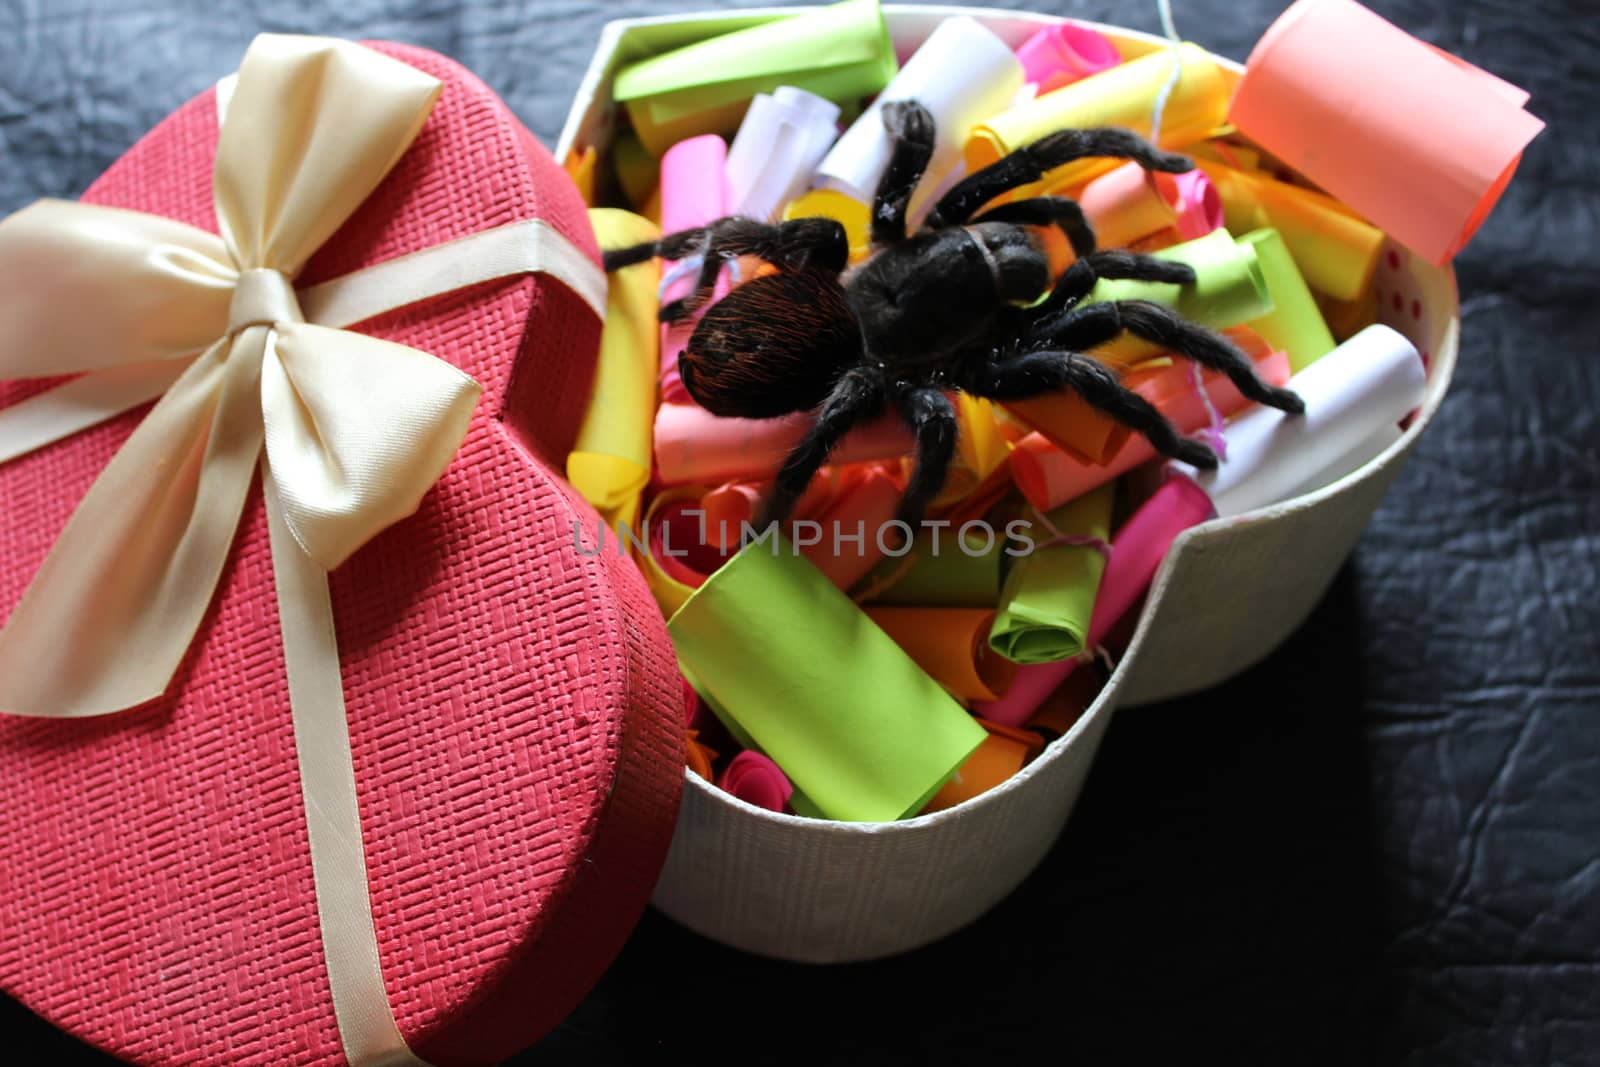 Tarantula in a gift box by SmirMaxStock